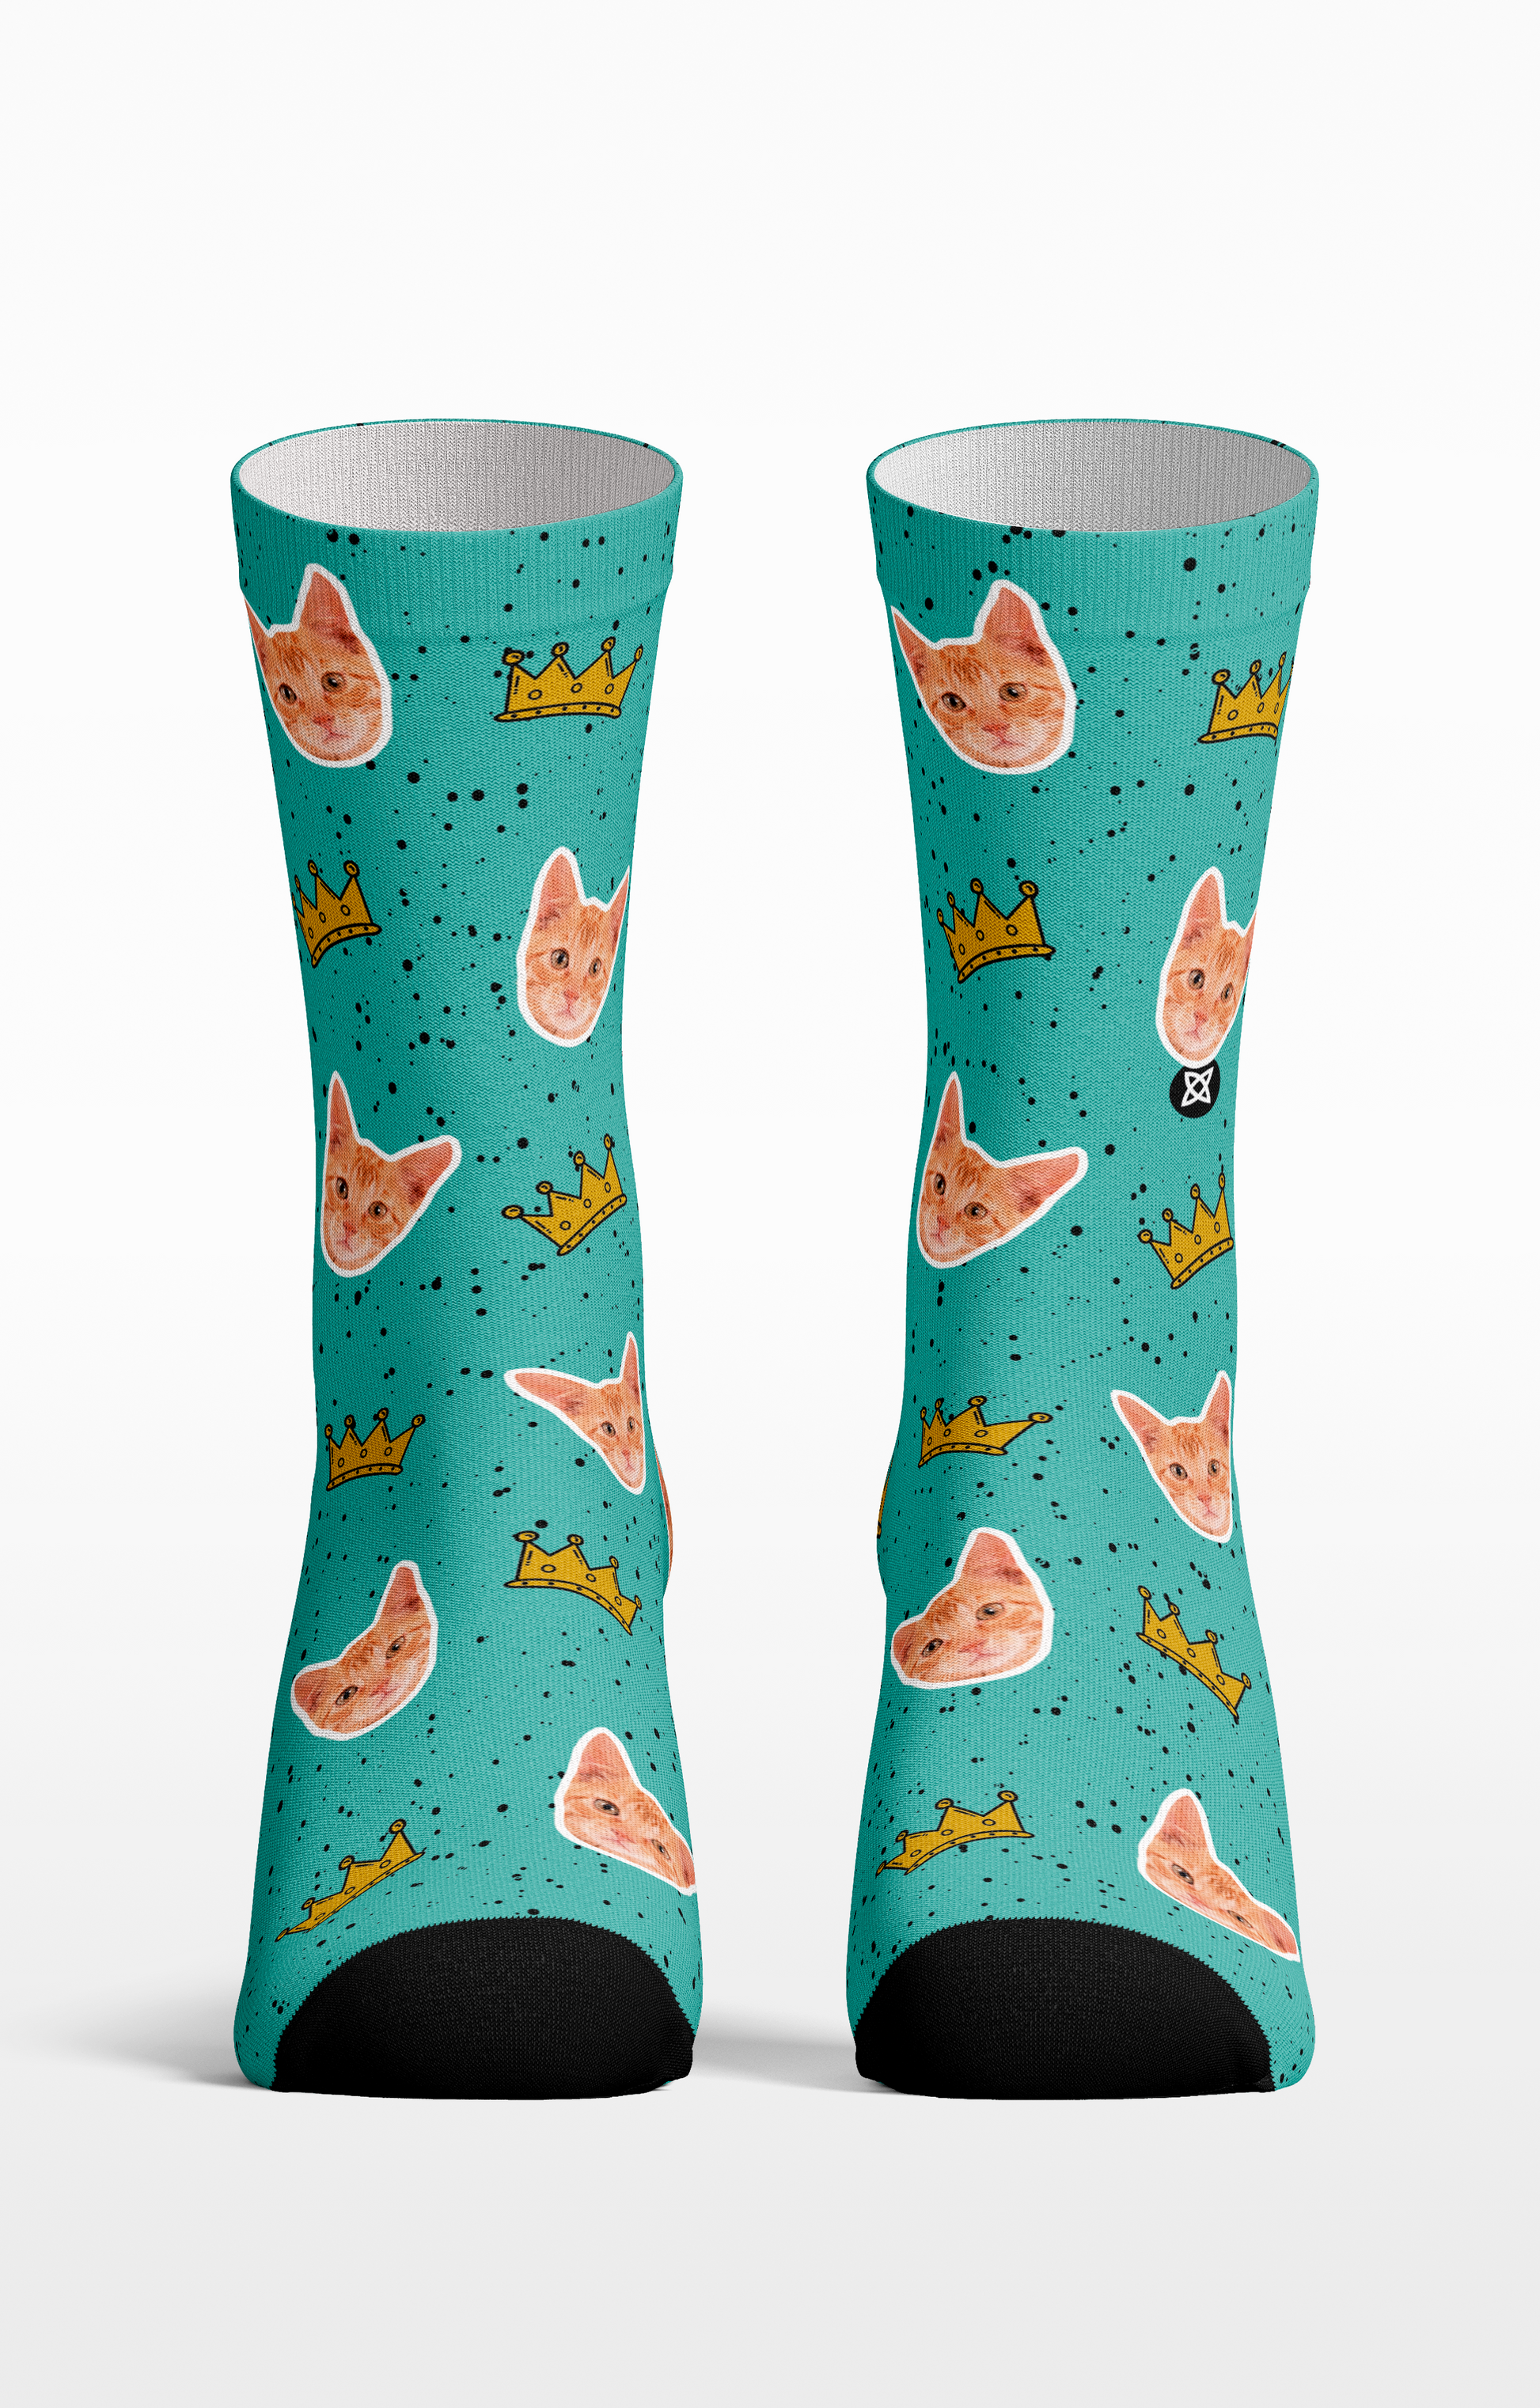 Calcetines Personalizados Perros – The Print Socks